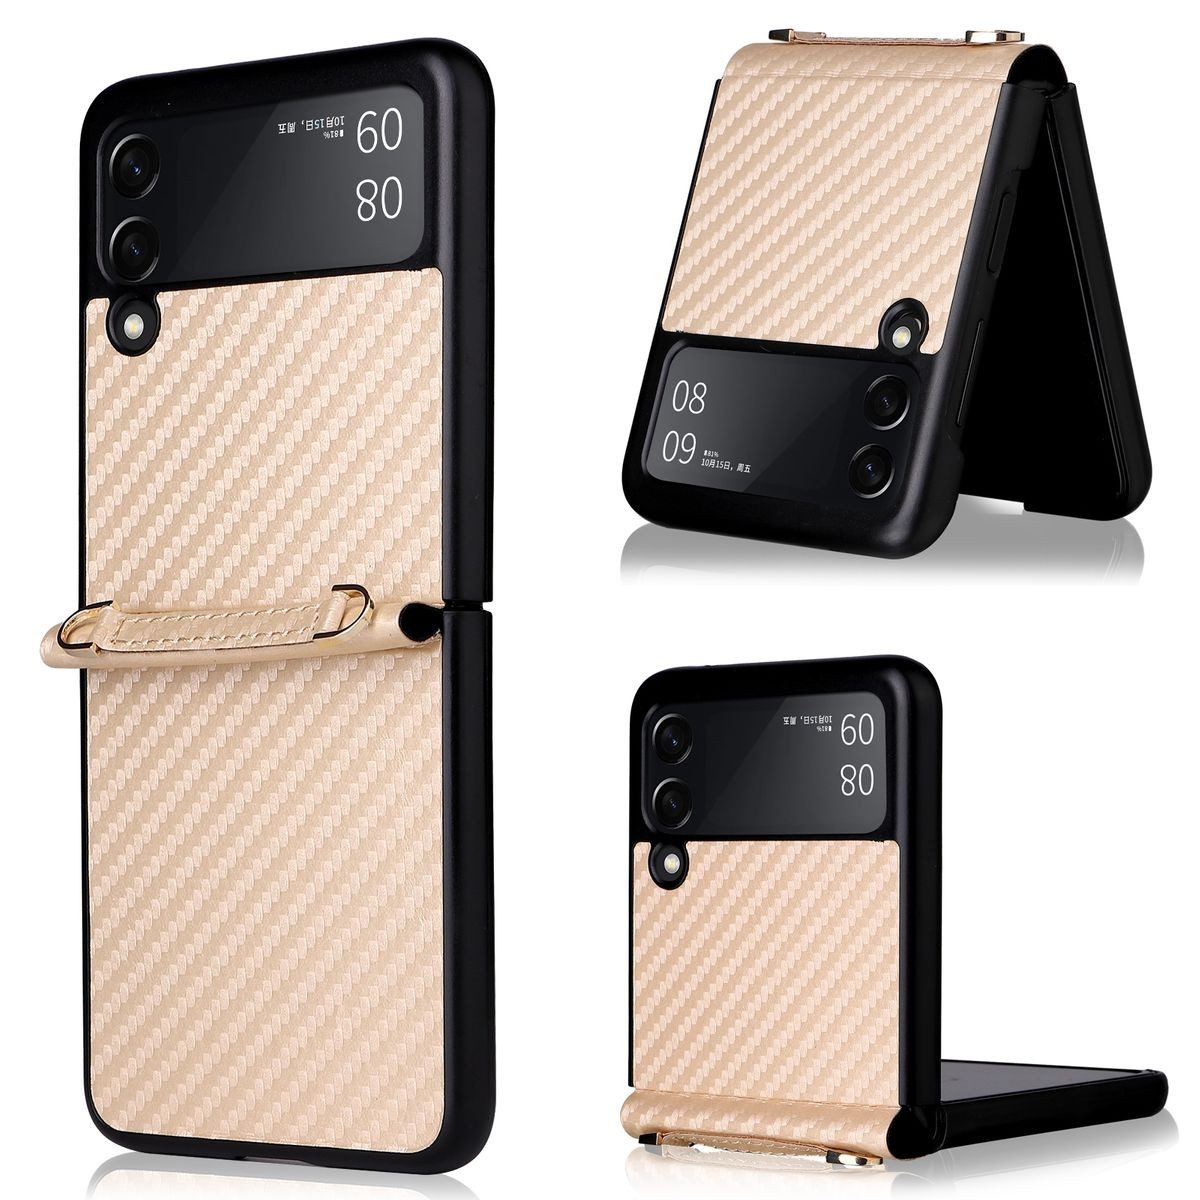 König Design Handyhülle Samsung Galaxy Z Flip3 5G, Schutzhülle Case Cover Backcover Etuis Bumper